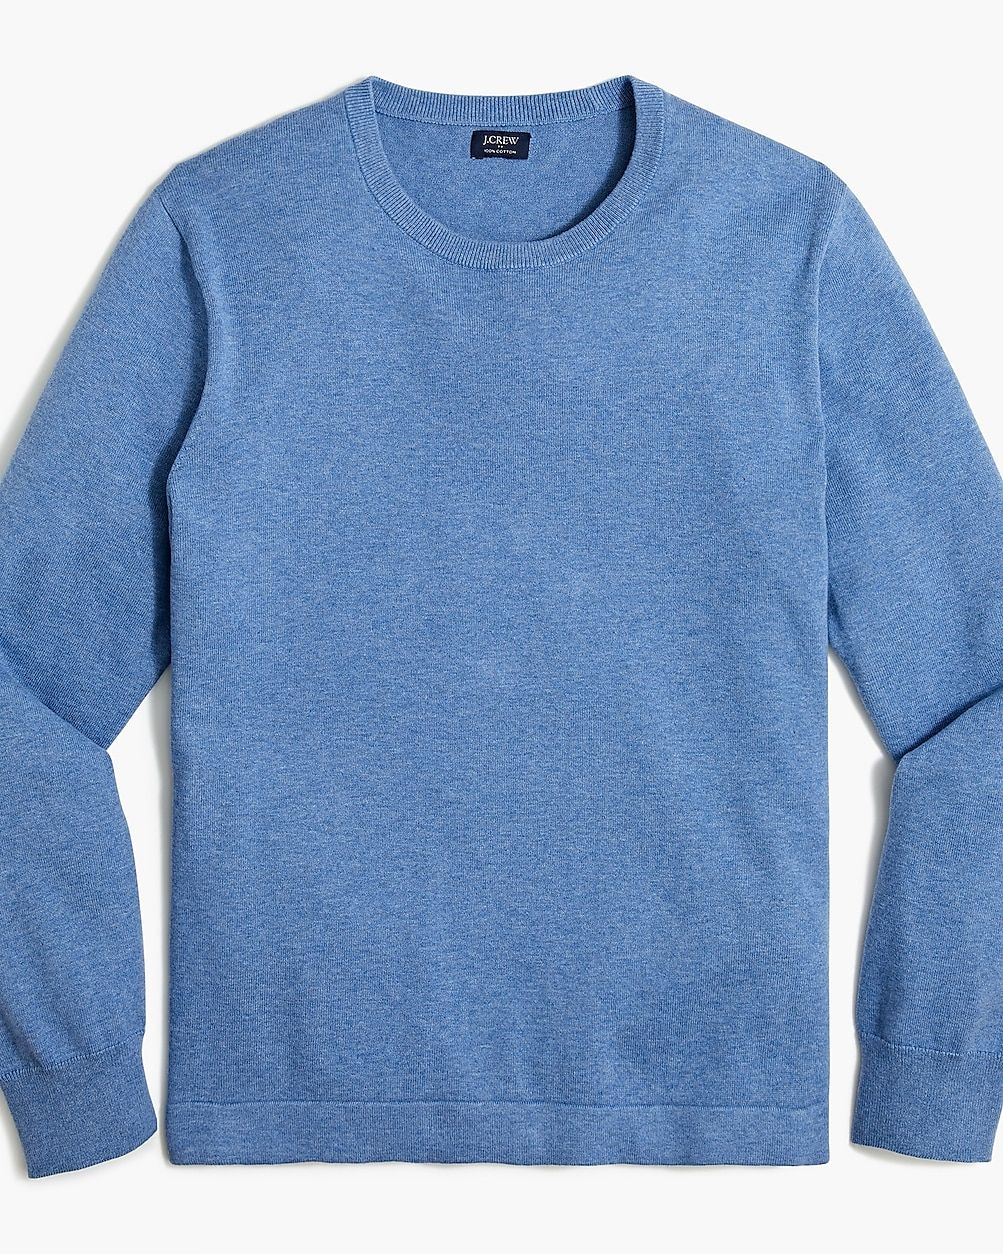 Cotton crewneck sweater-tee | J.Crew Factory